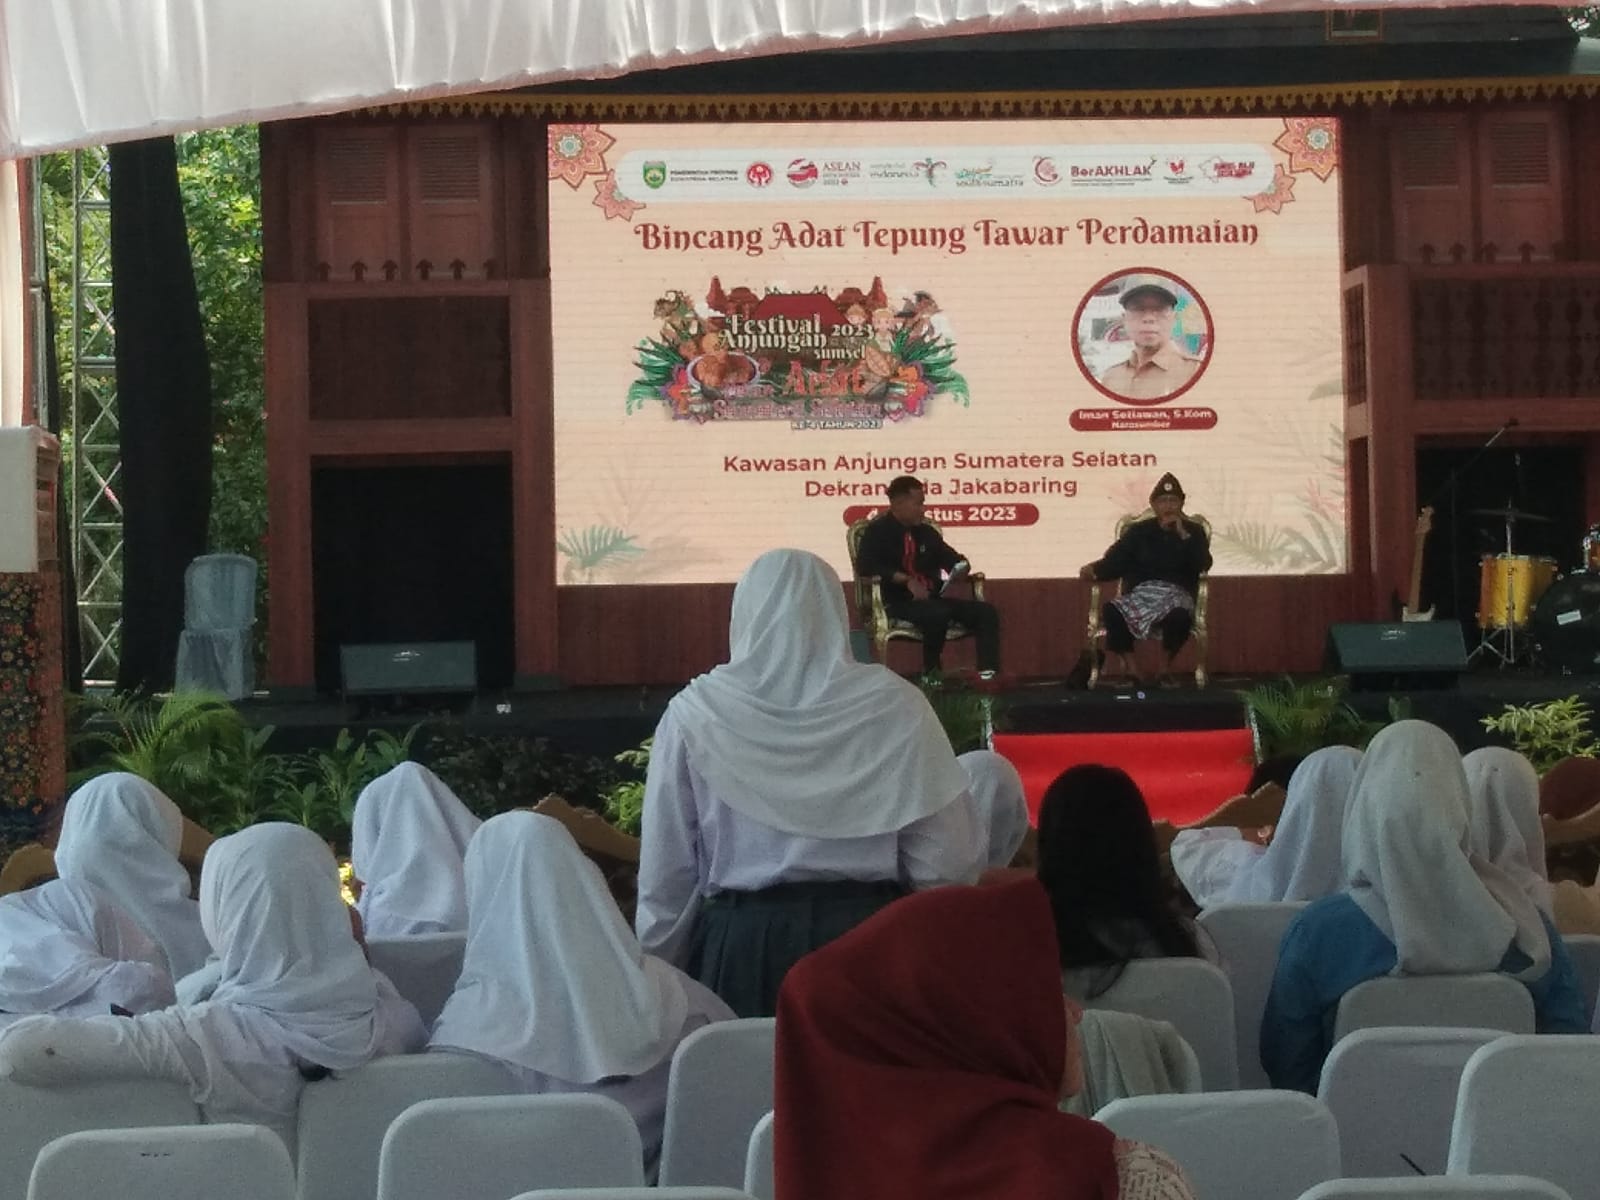 Mengenal Sejarah Tepung Tawar Perdamaian, Budaya Khas Melayu Dipegang Teguh Masyarakat Kota Palembang